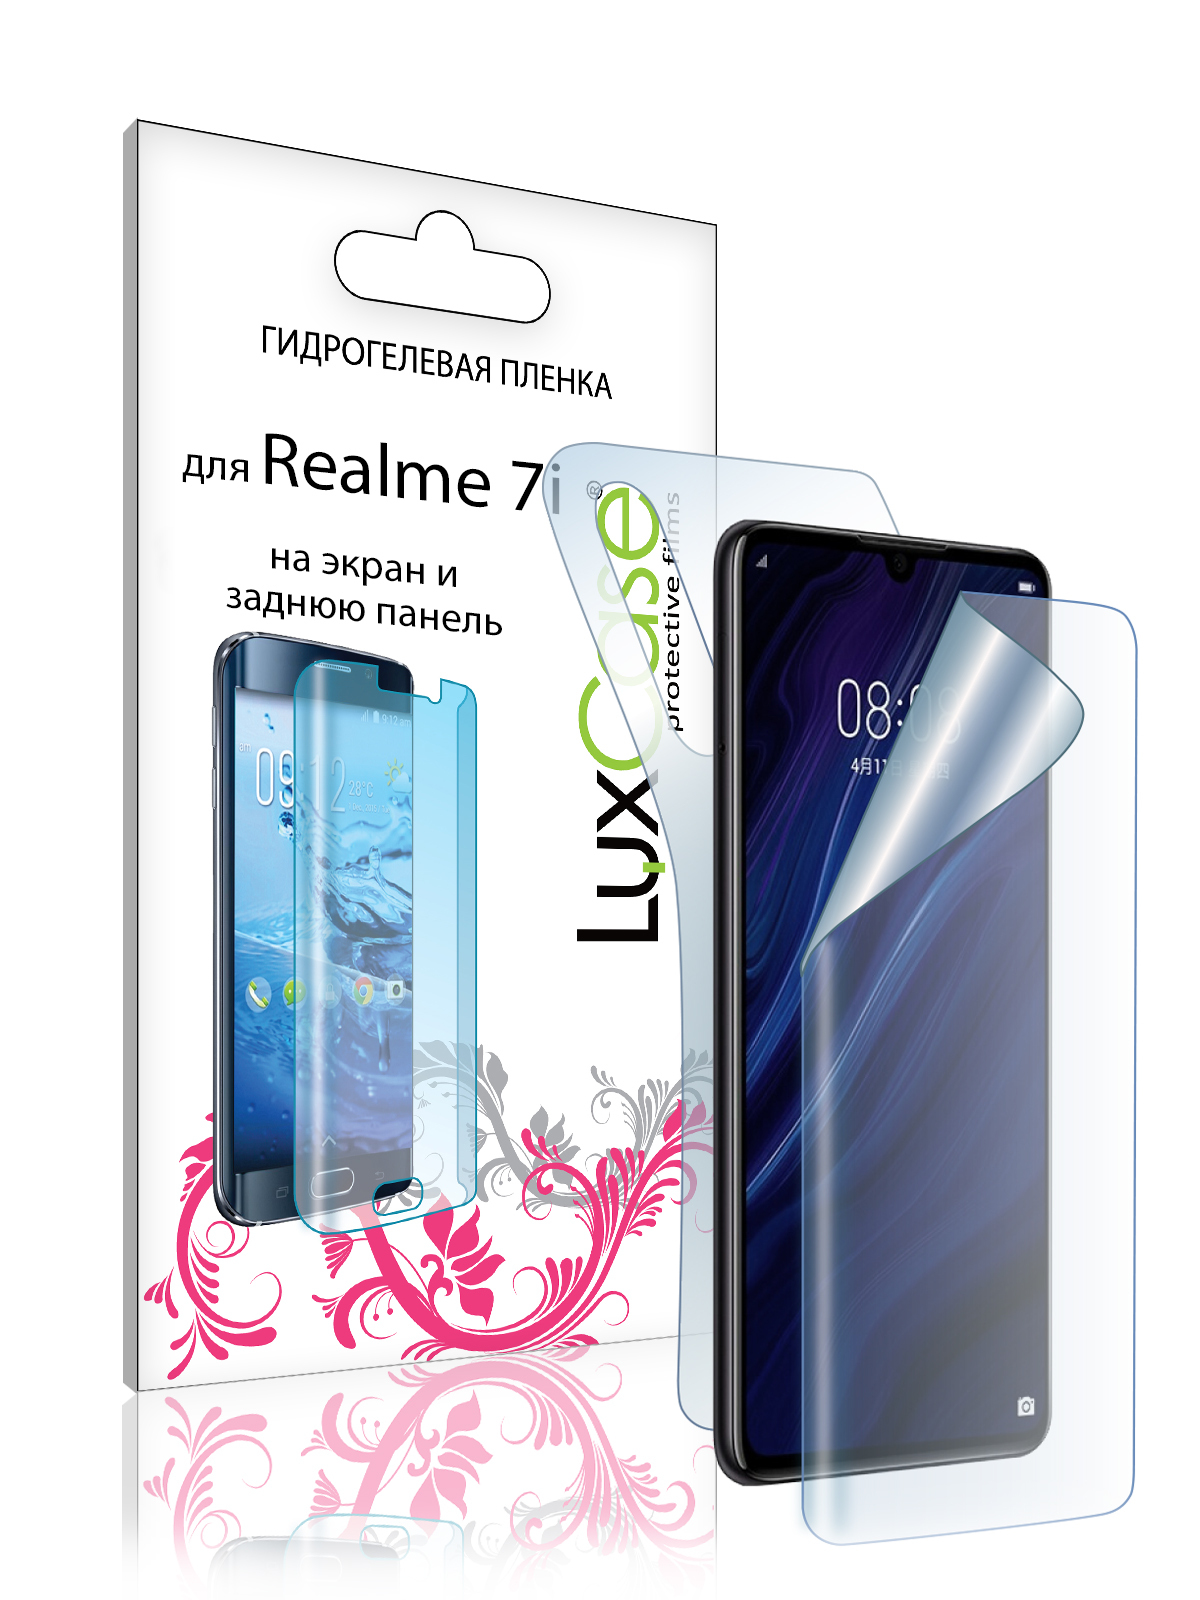 Пленка гидрогелевая LuxCase для Realme 7i 0.14mm Front and Back Transparent 86593 гидрогелевая пленка luxcase для realme 7i 0 14mm back transparent 86592